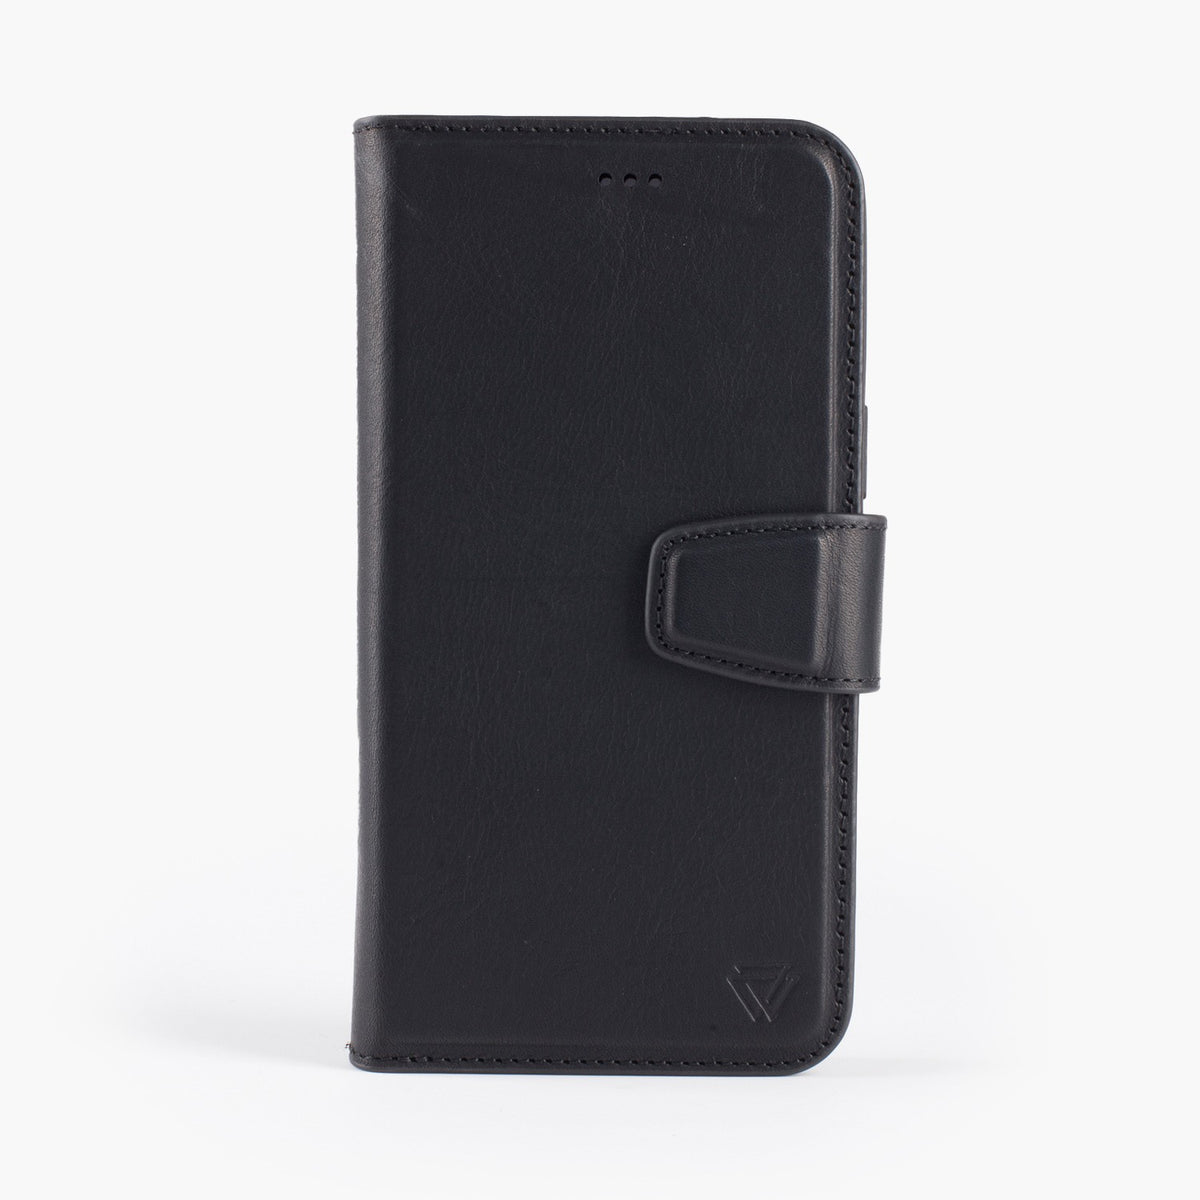 Wachikopa Genuine Leather Magic Book Case 2 in 1 for iPhone X / XS Black